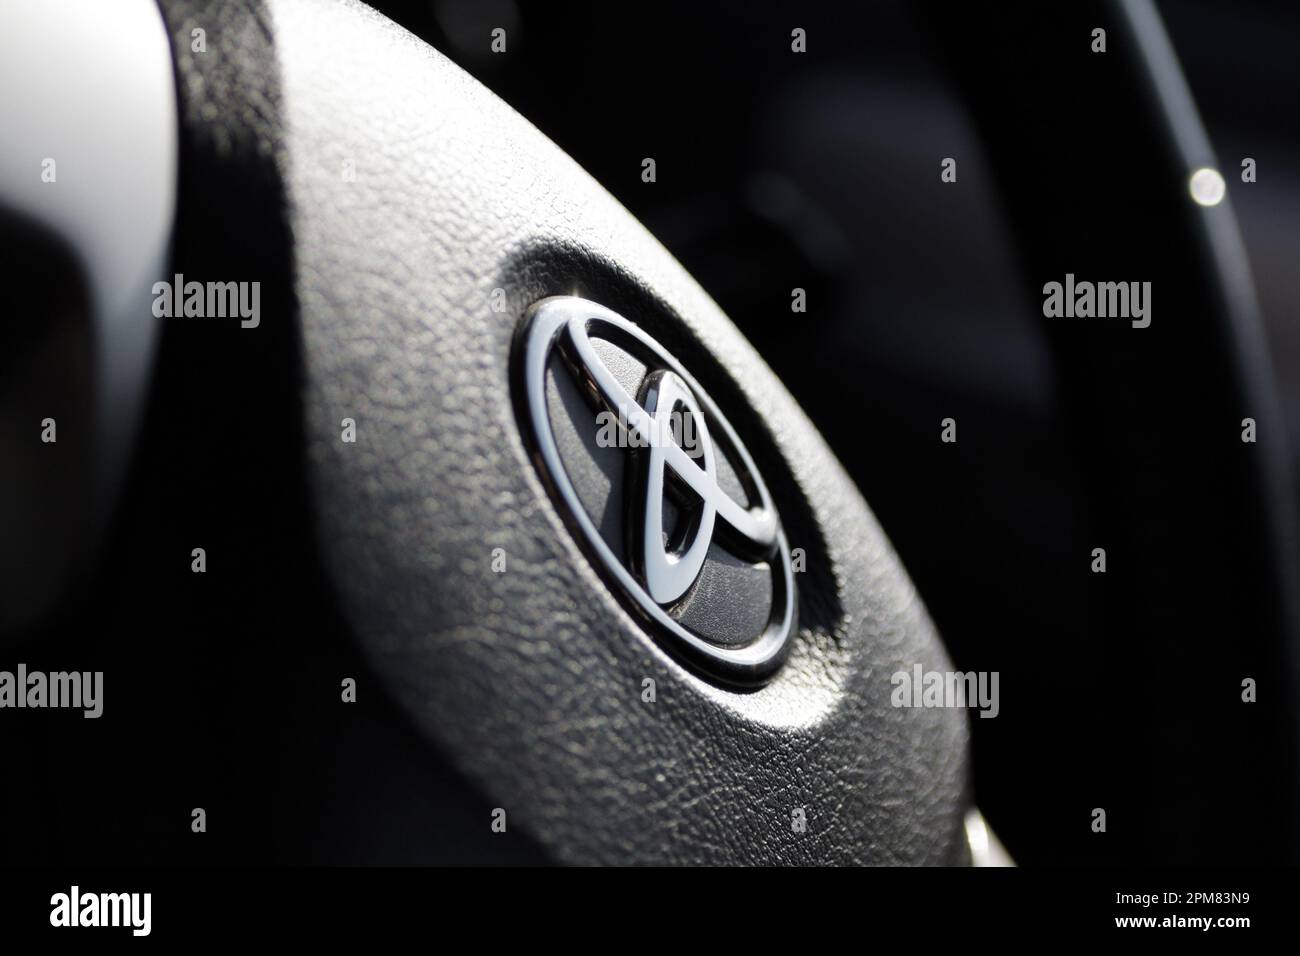 VLADIVOSTOK, RUSSIA - SEPTEMBER 24, 2012: Toyota logo on steering wheel. Selective focus. Stock Photo